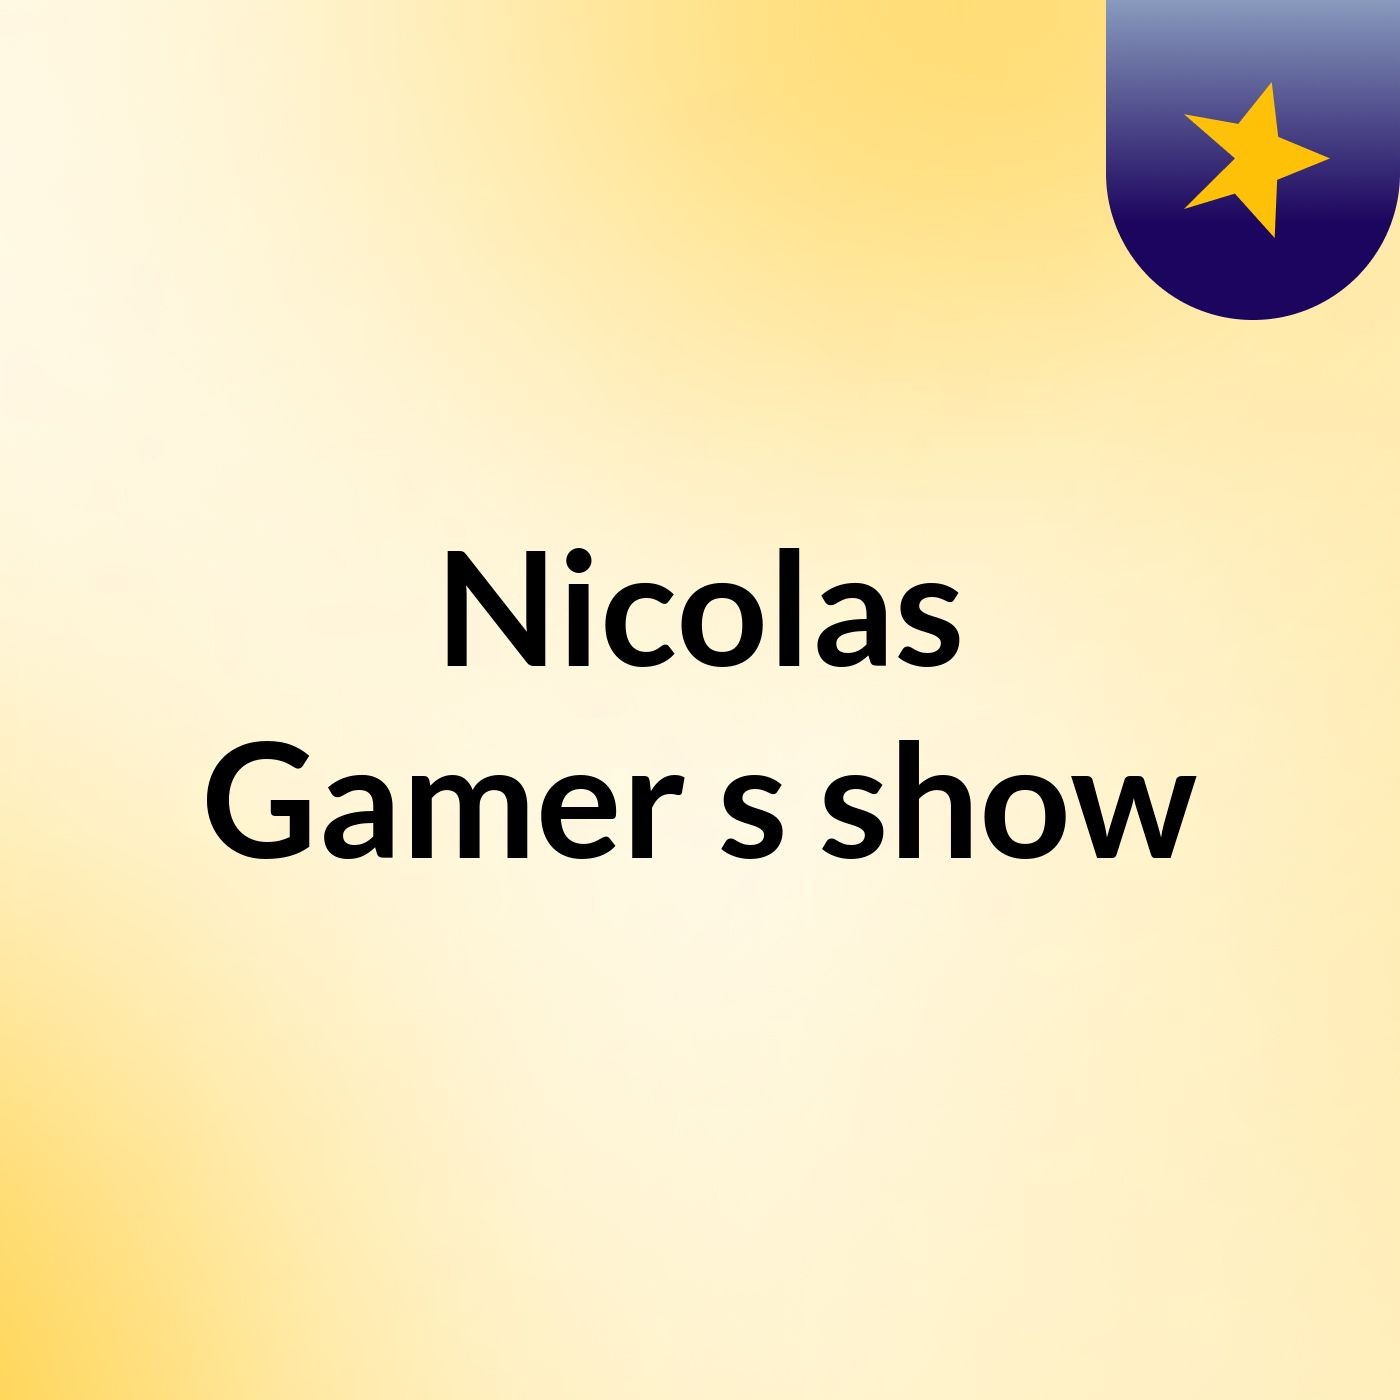 Nicolas Gamer's show